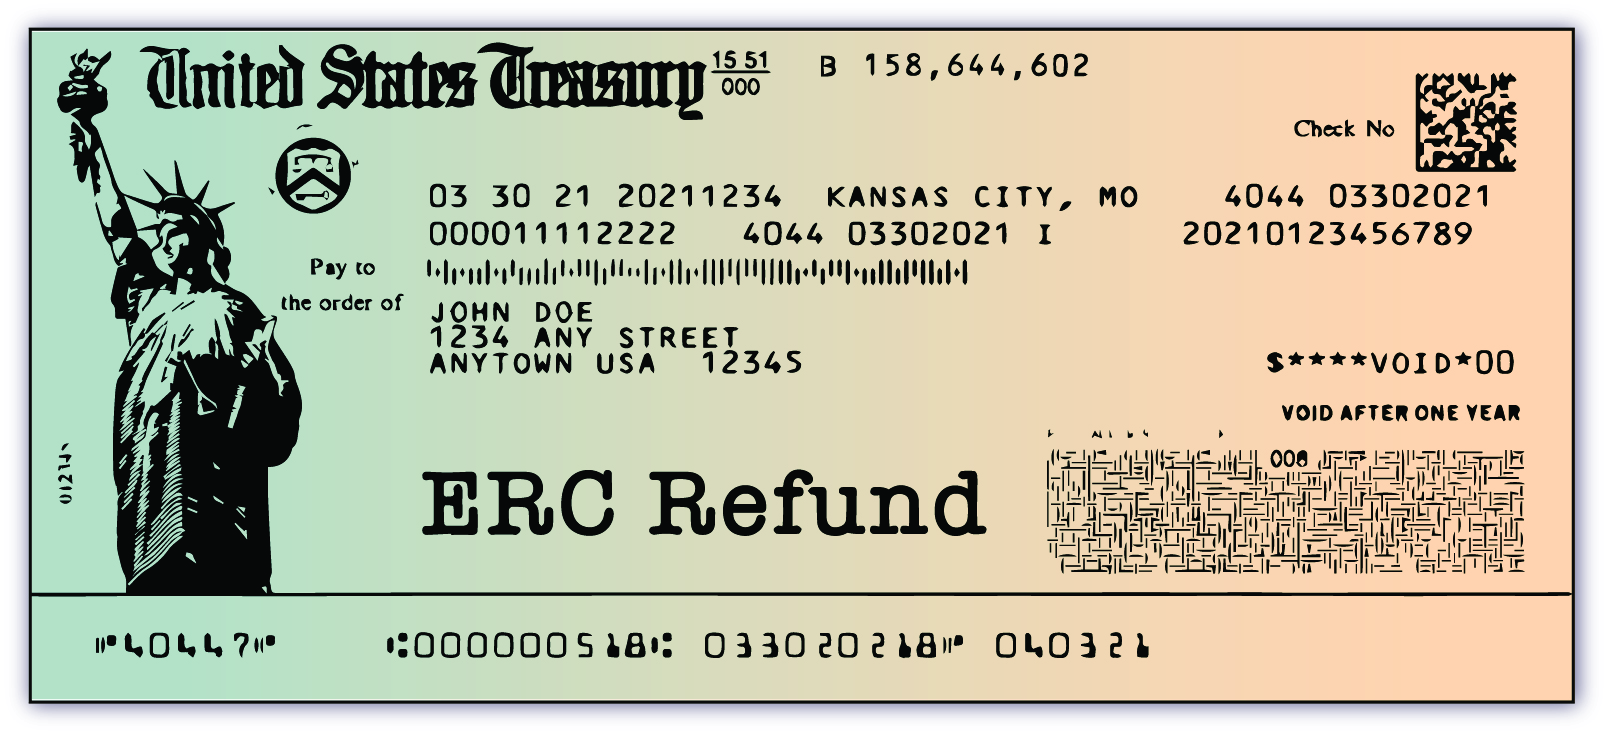 image of refund check print